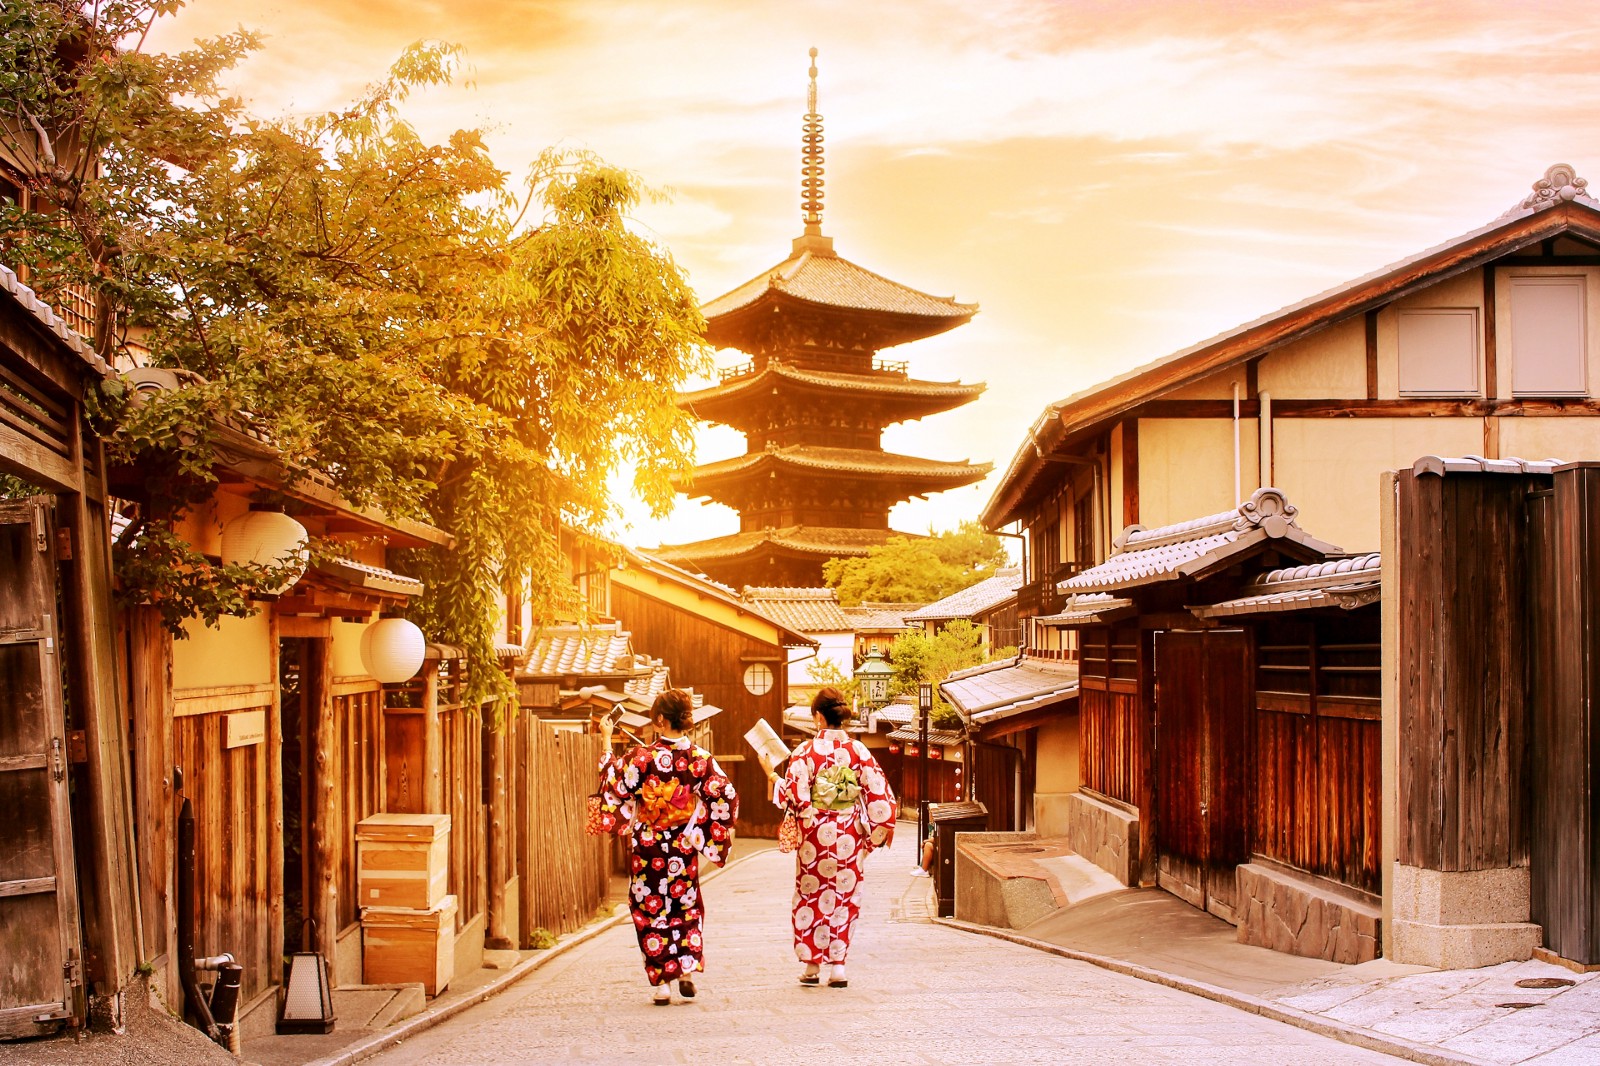 10 Best Restaurants in Kyoto 2020